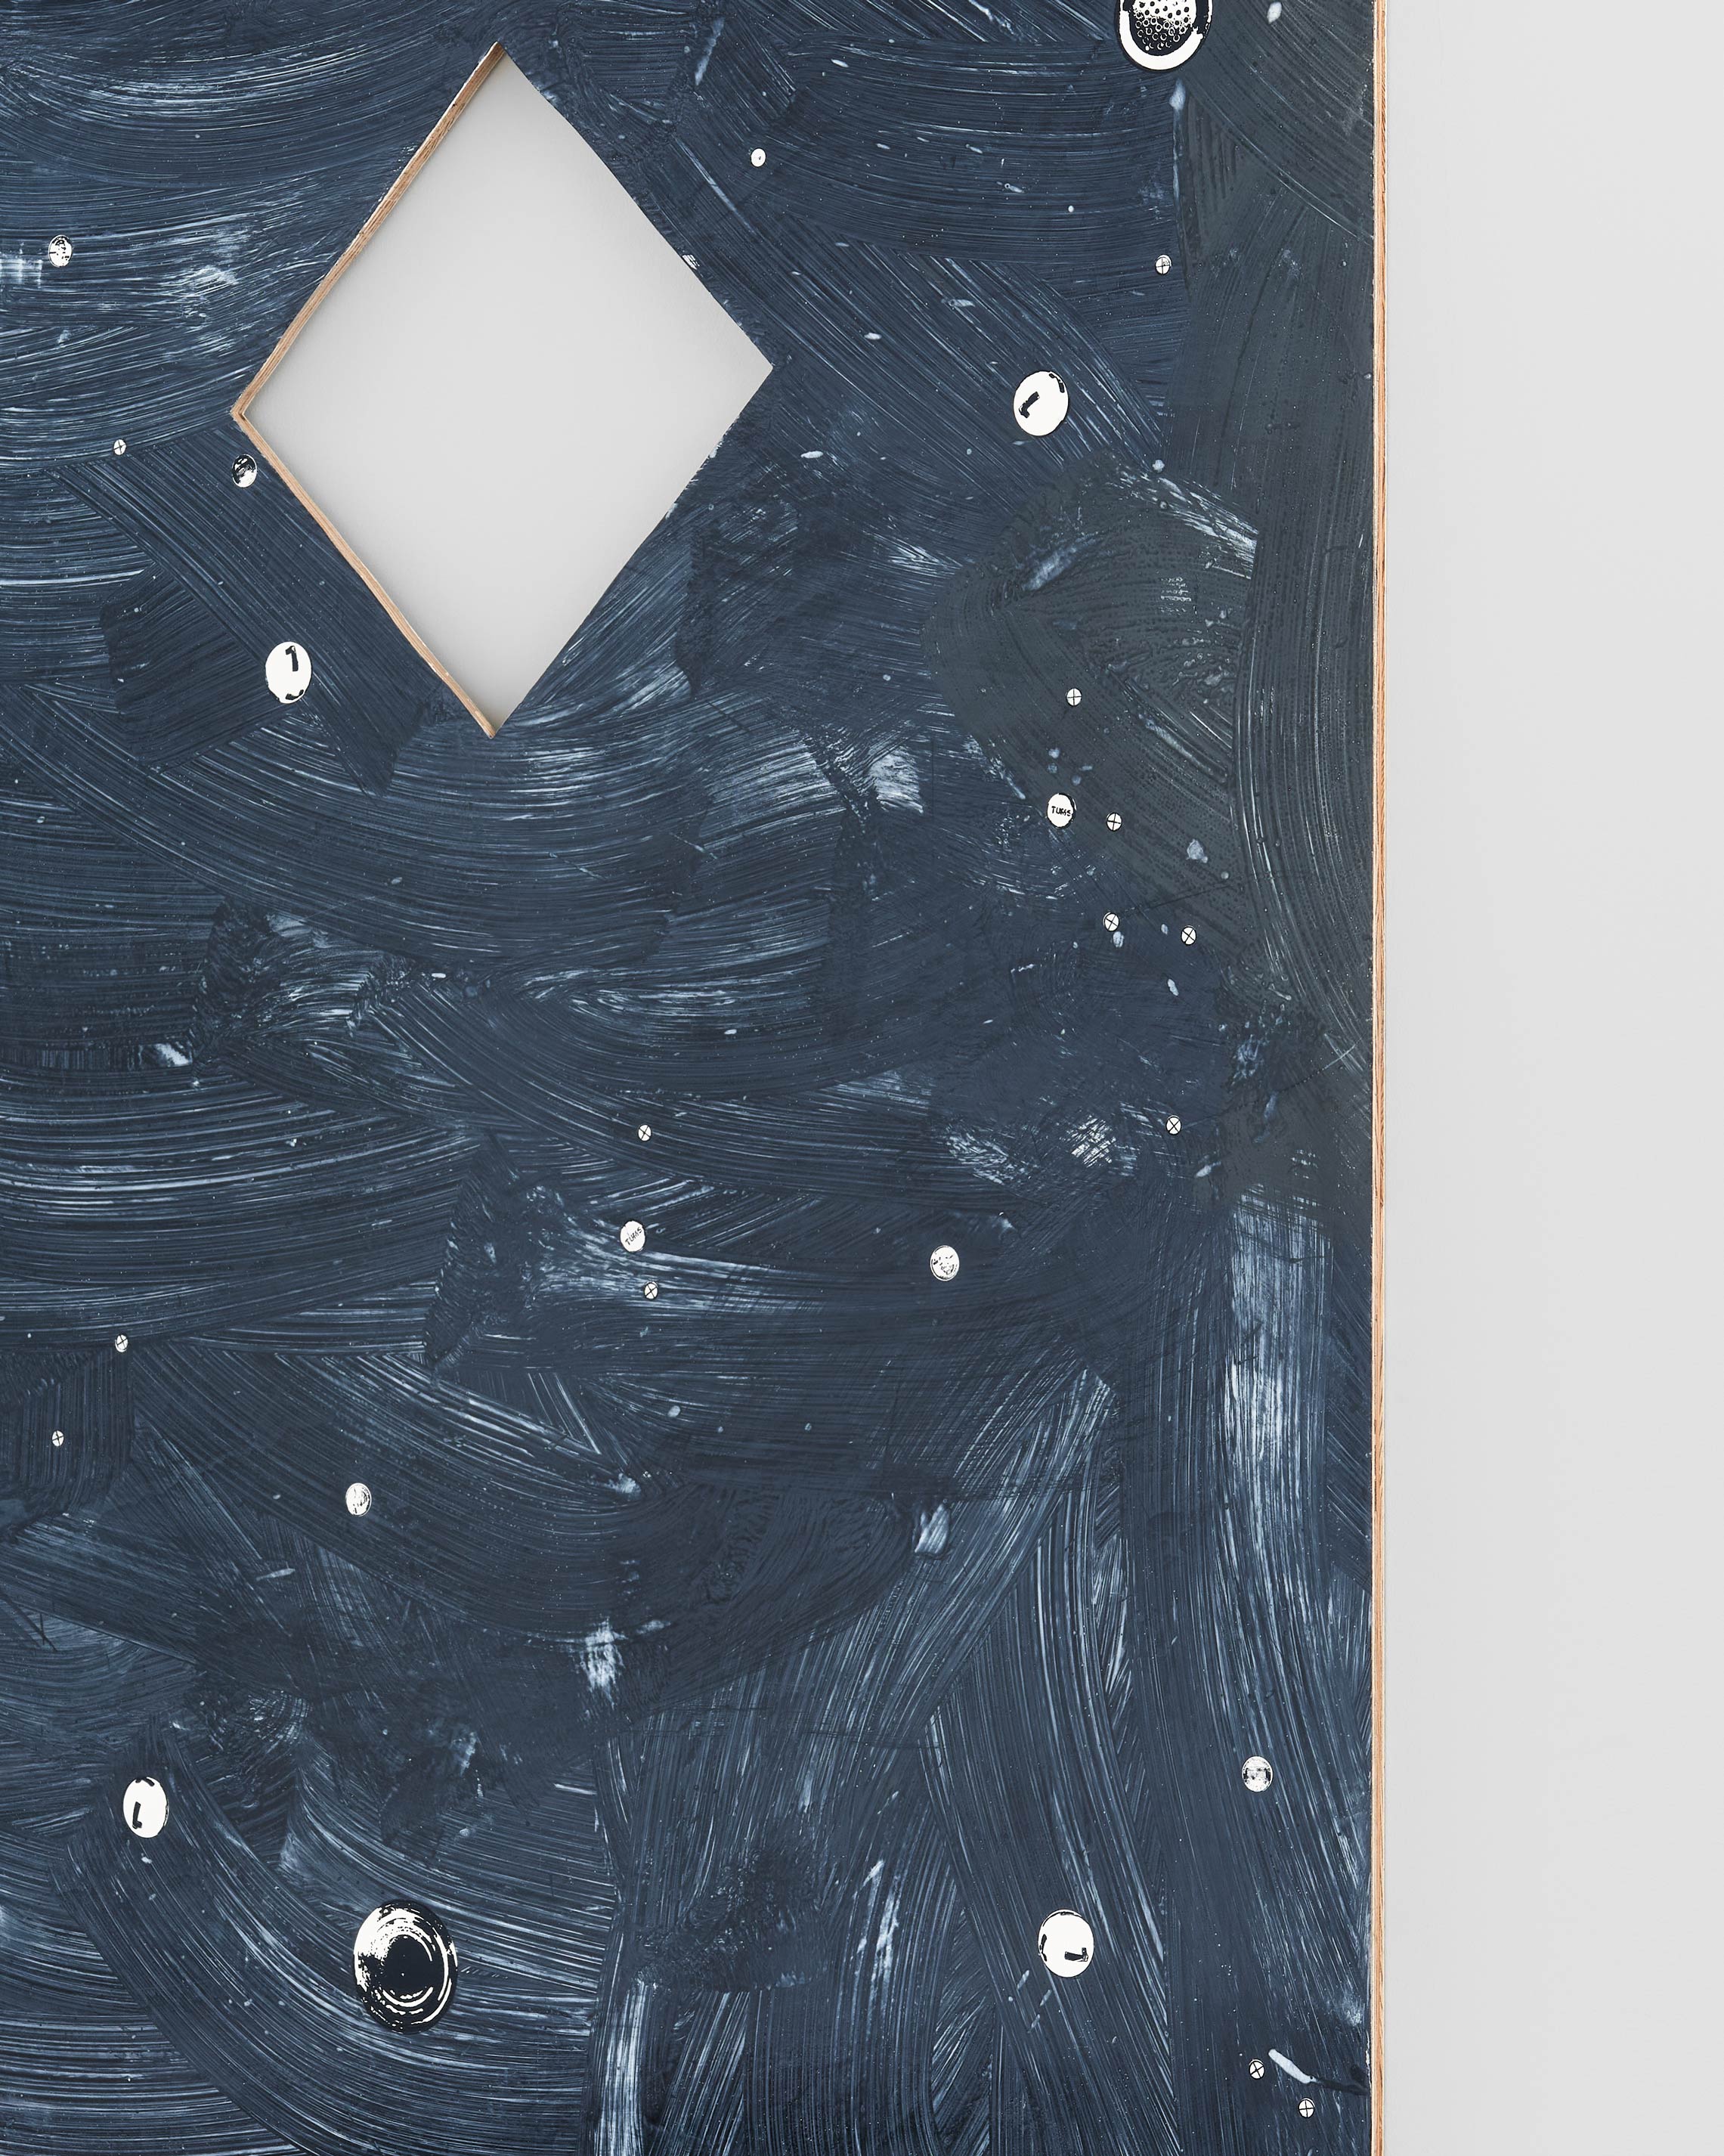 Alex Kwartler, Night Sky II (detail), 2022, Venetian plaster and enamel on plywood, 96 x 48 in.